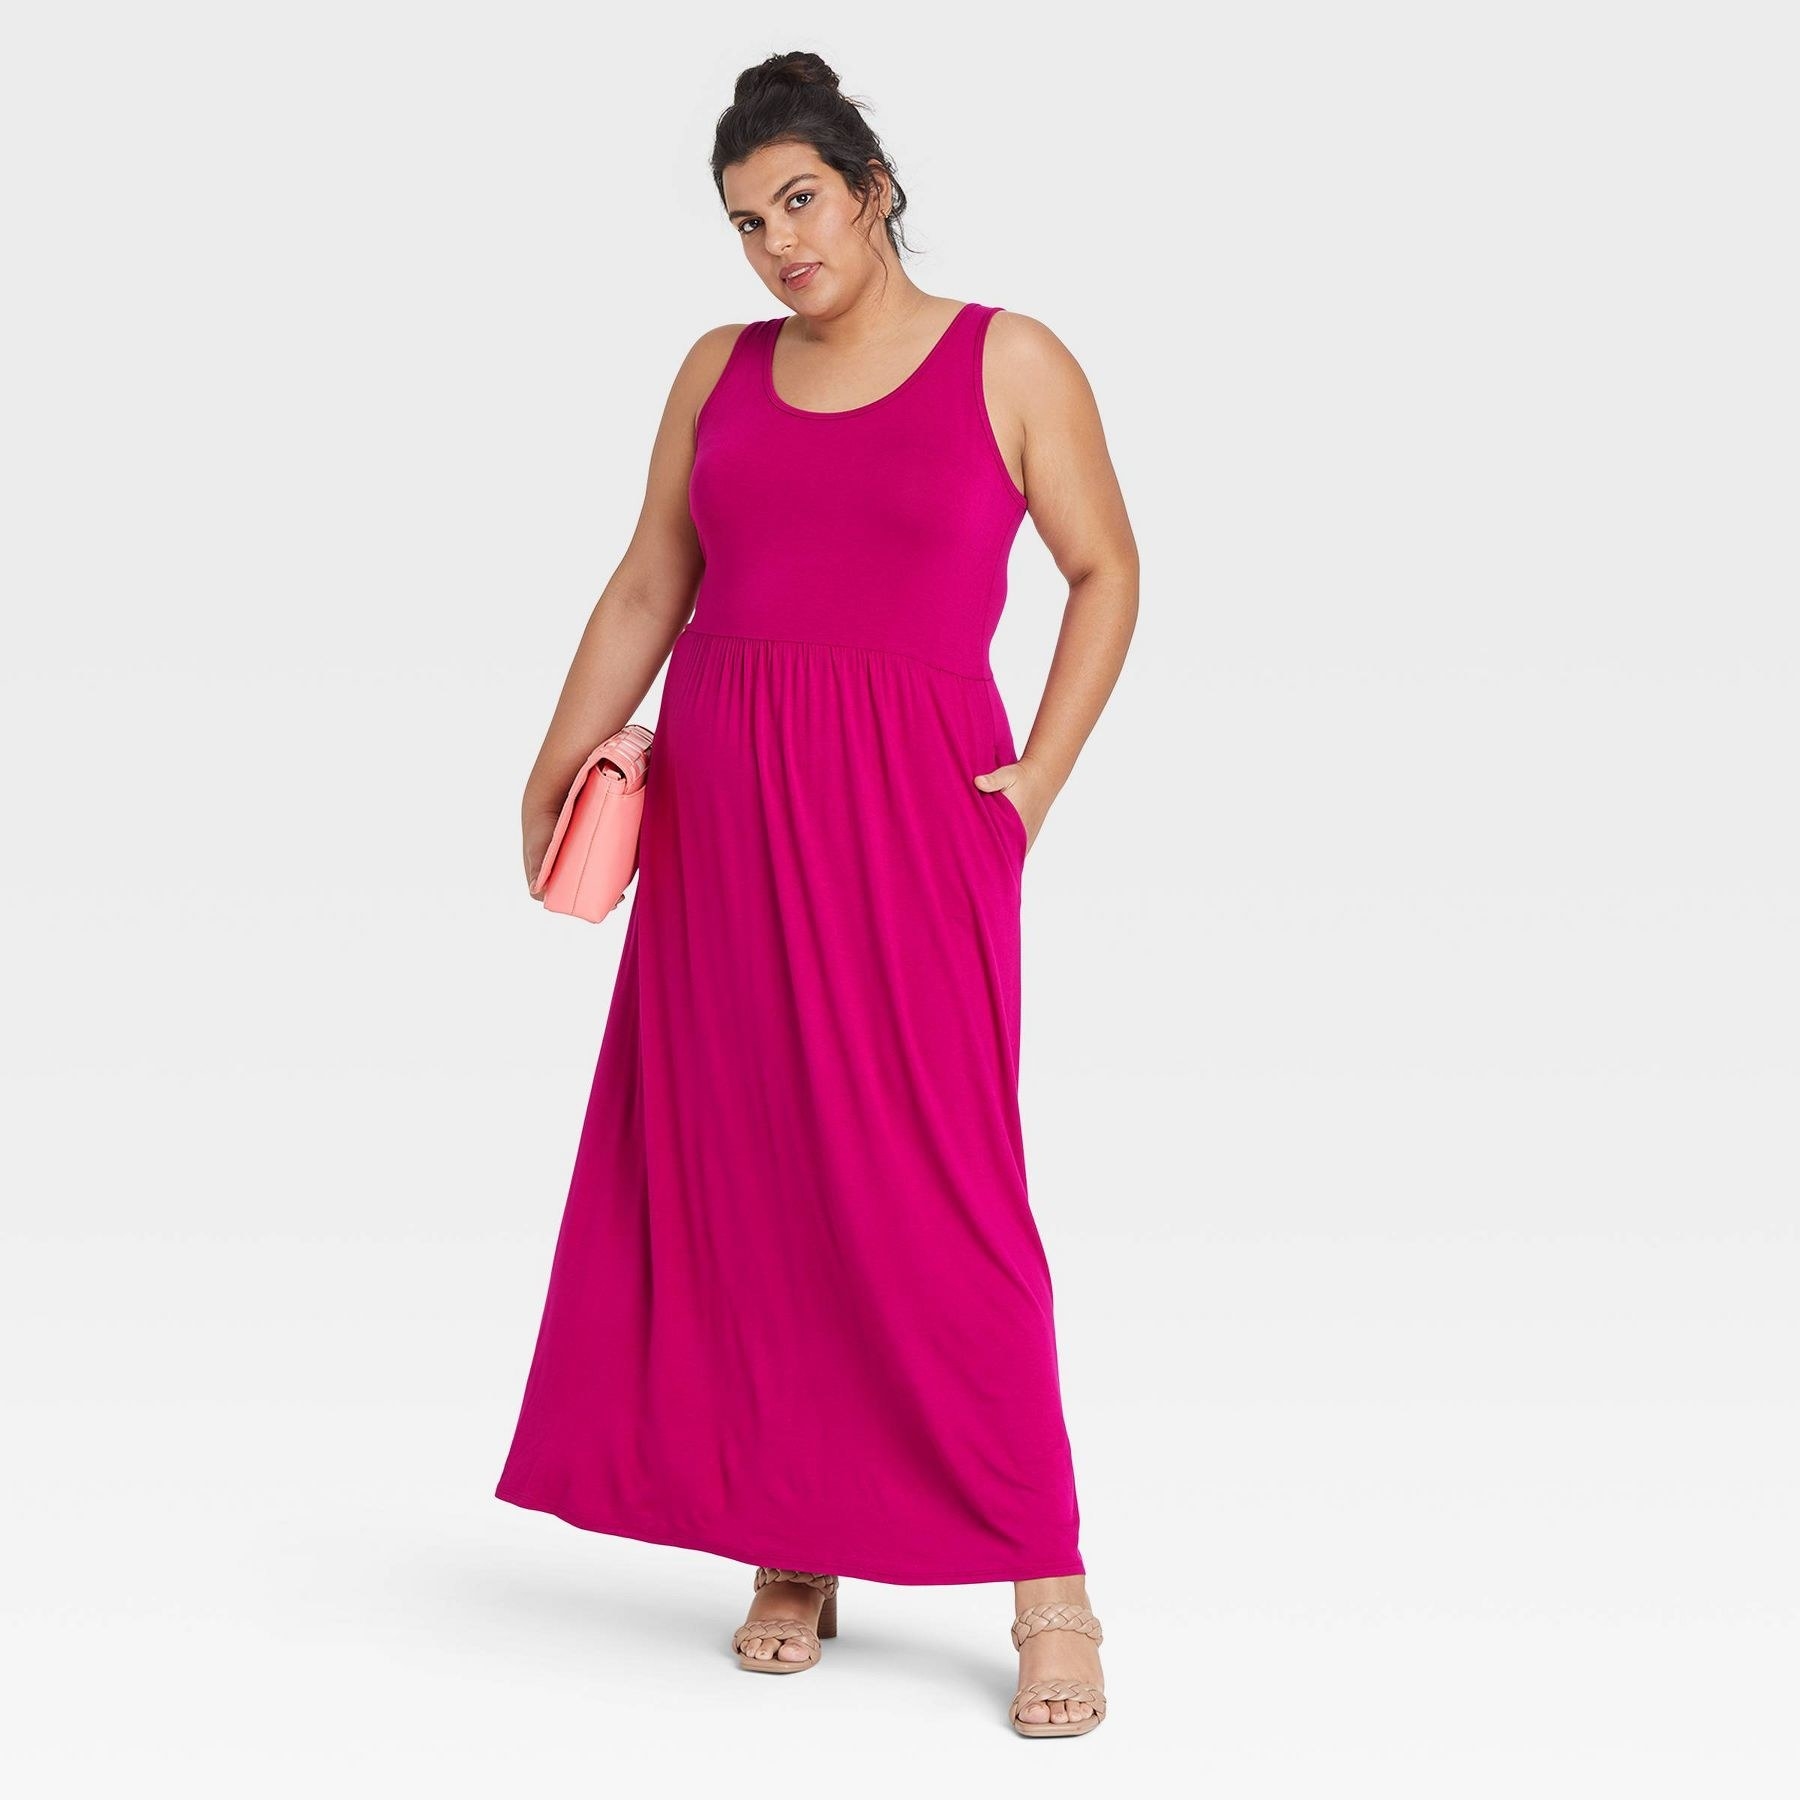 model wearing the dress in pink